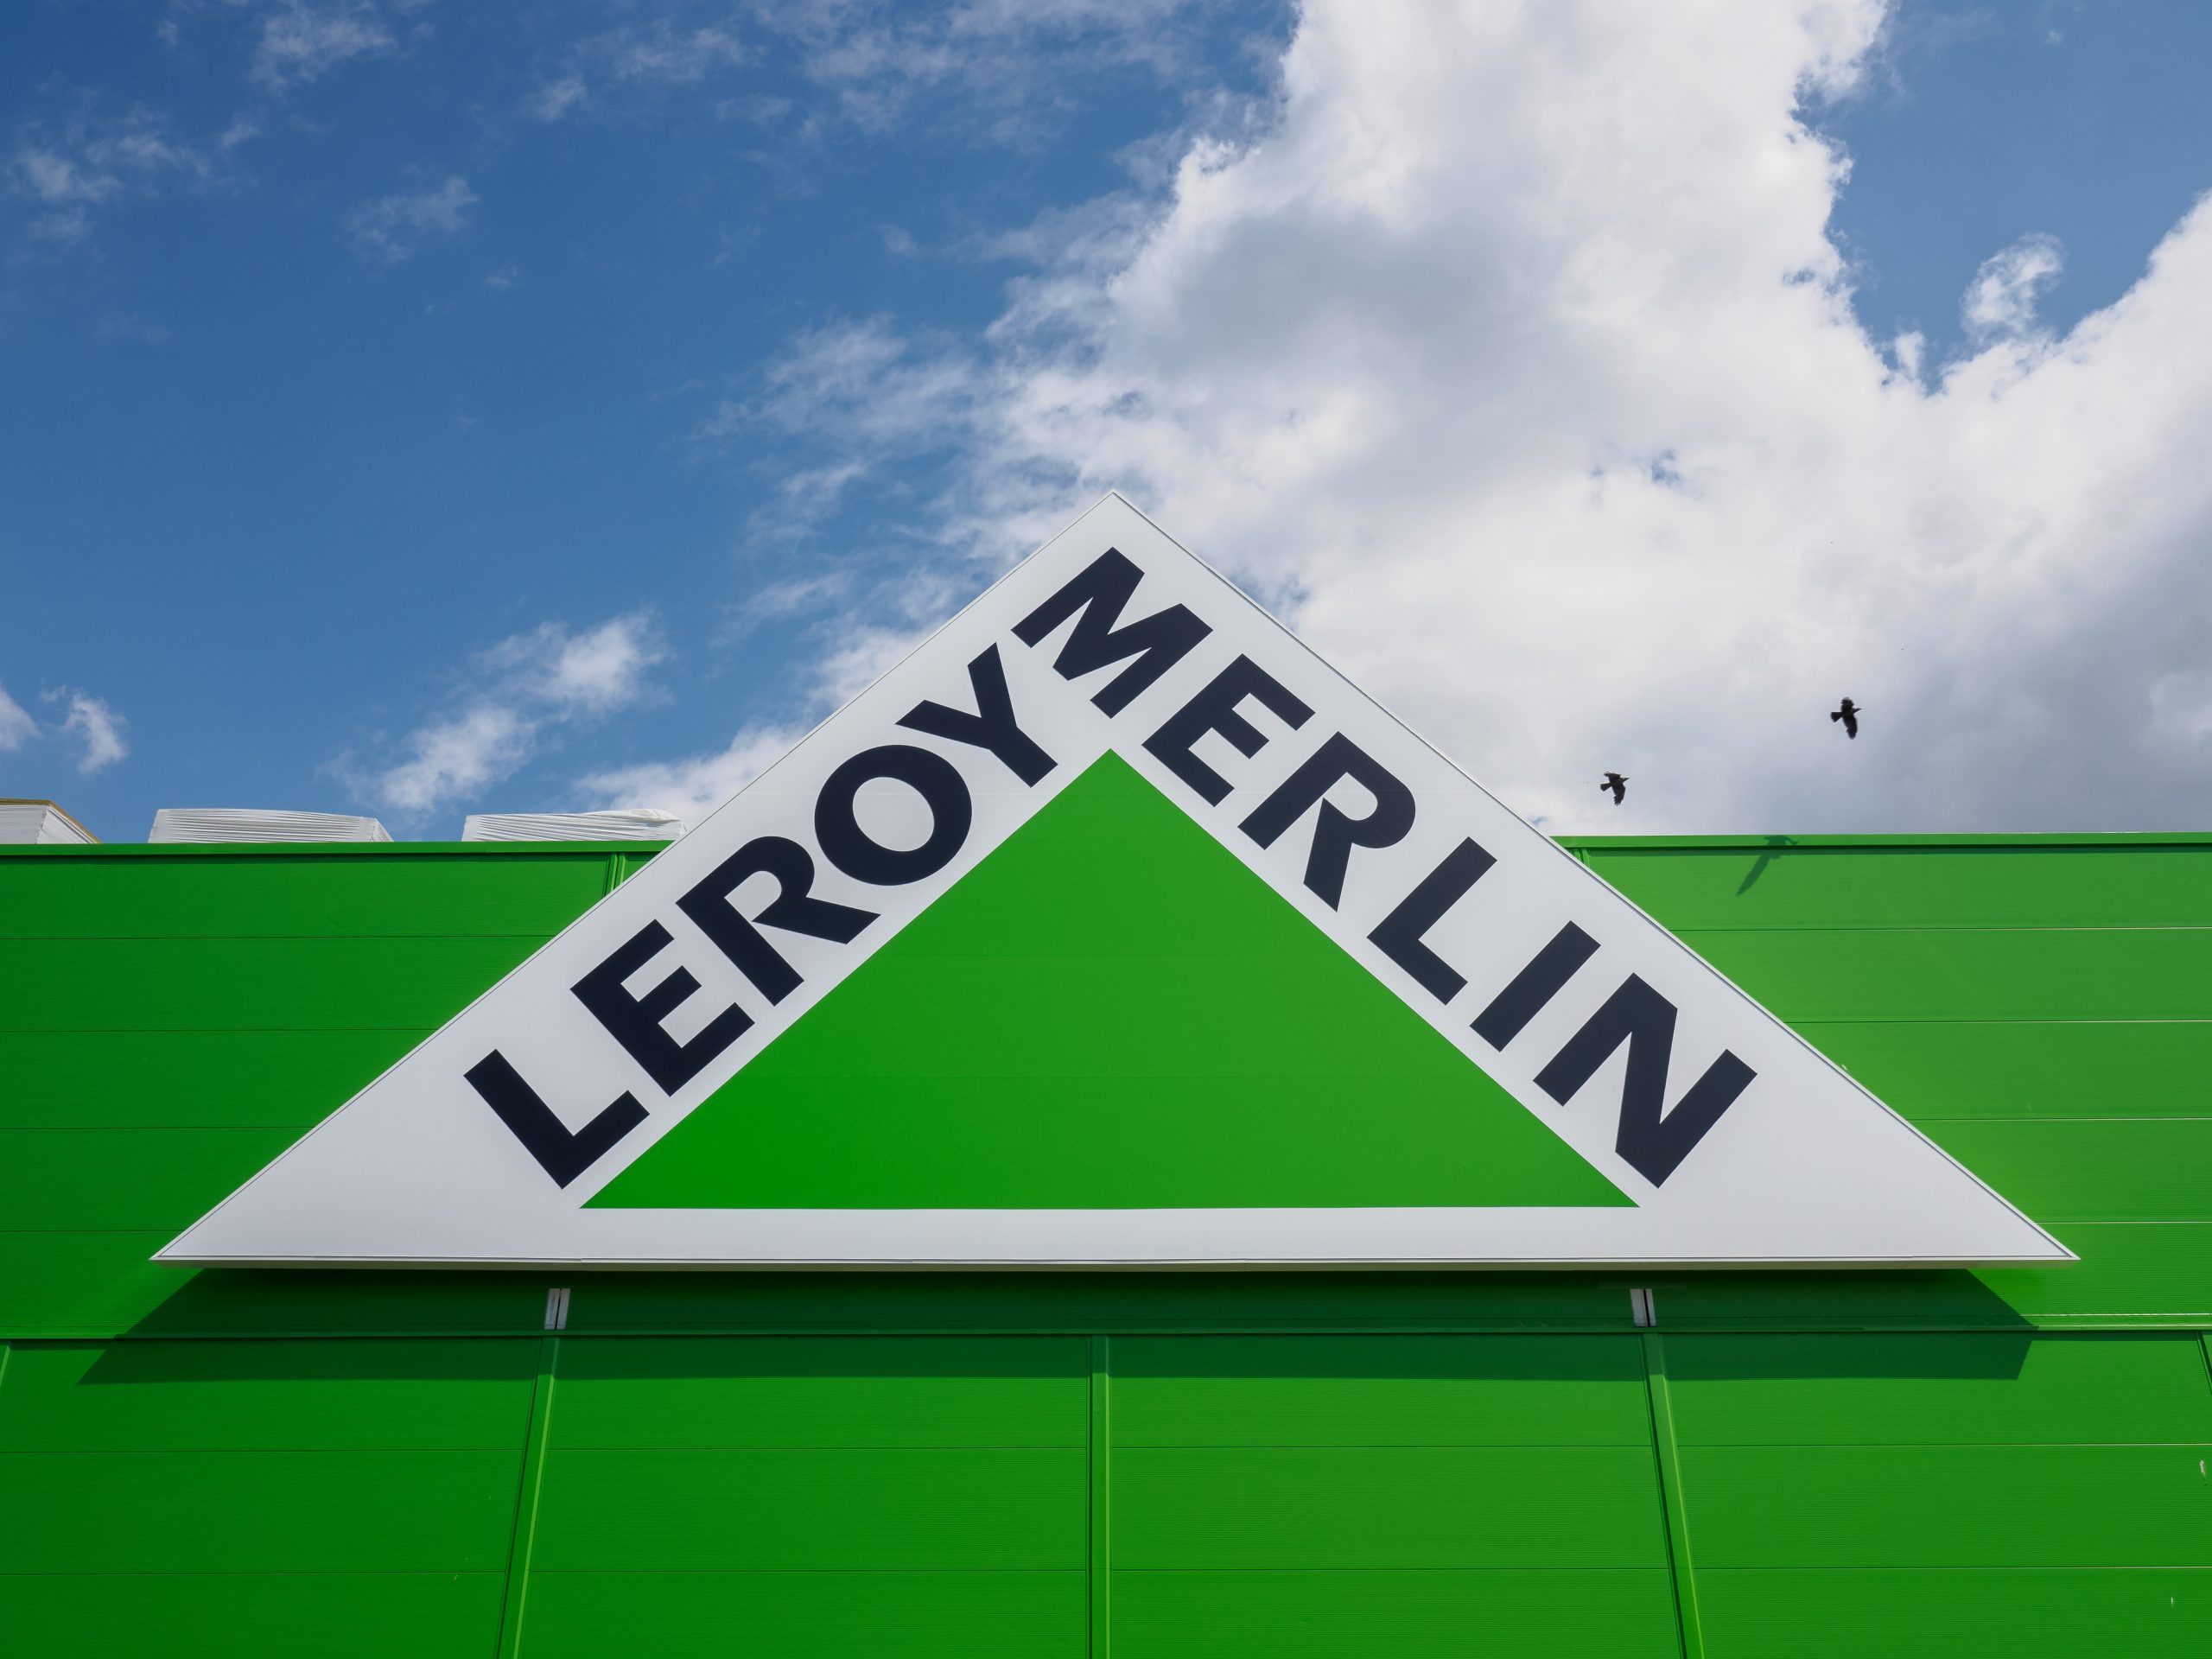 Leroy Merlin